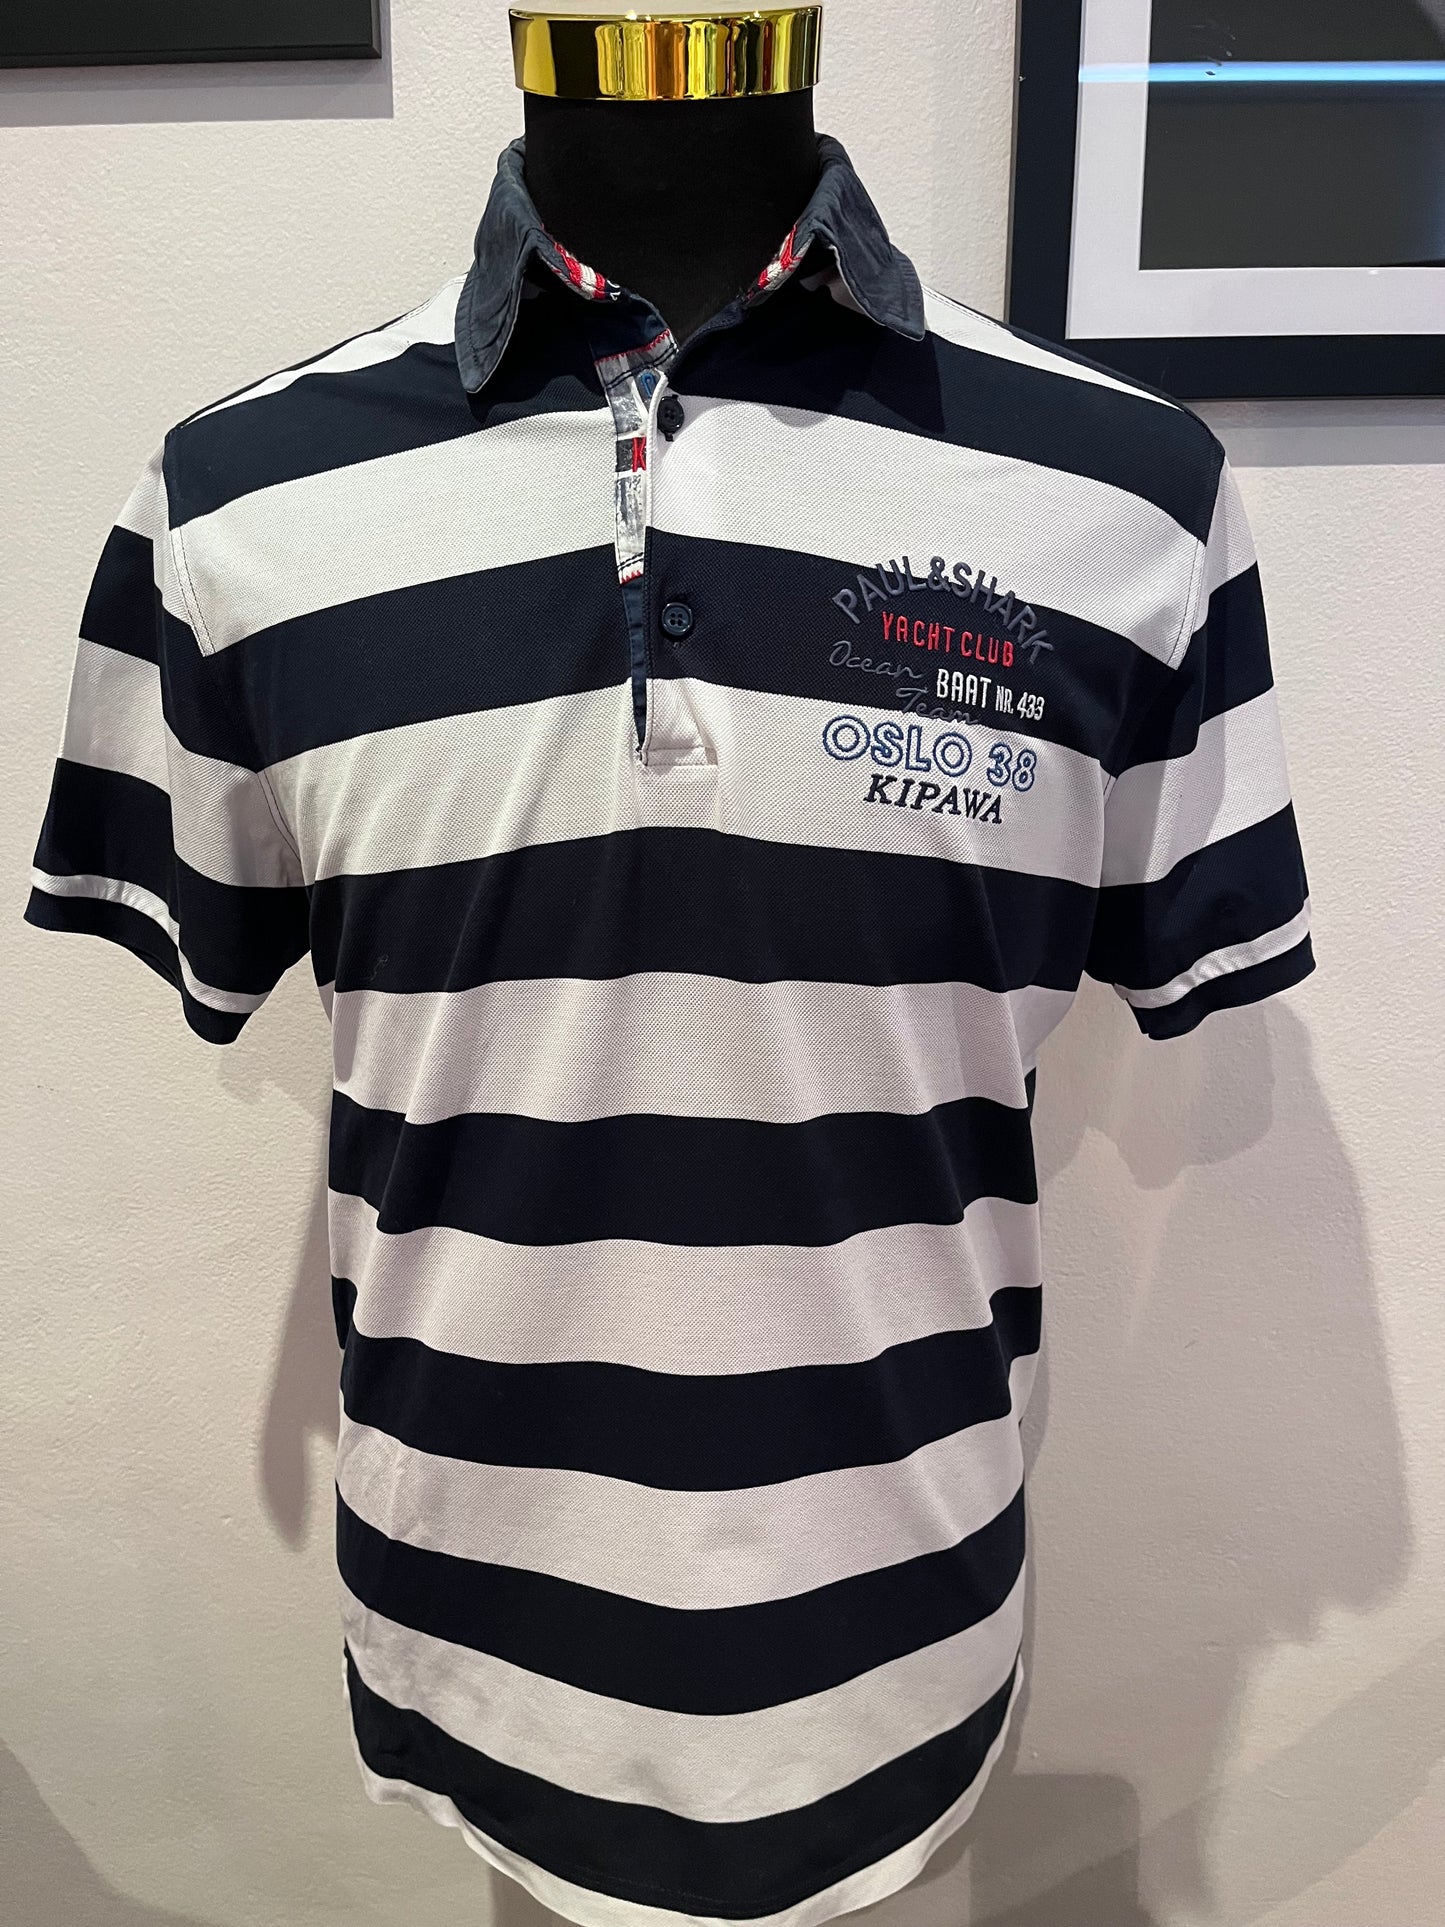 Paul & Shark 100% Cotton Blue White Stripe Polo Shirt Size Large Classic Fit